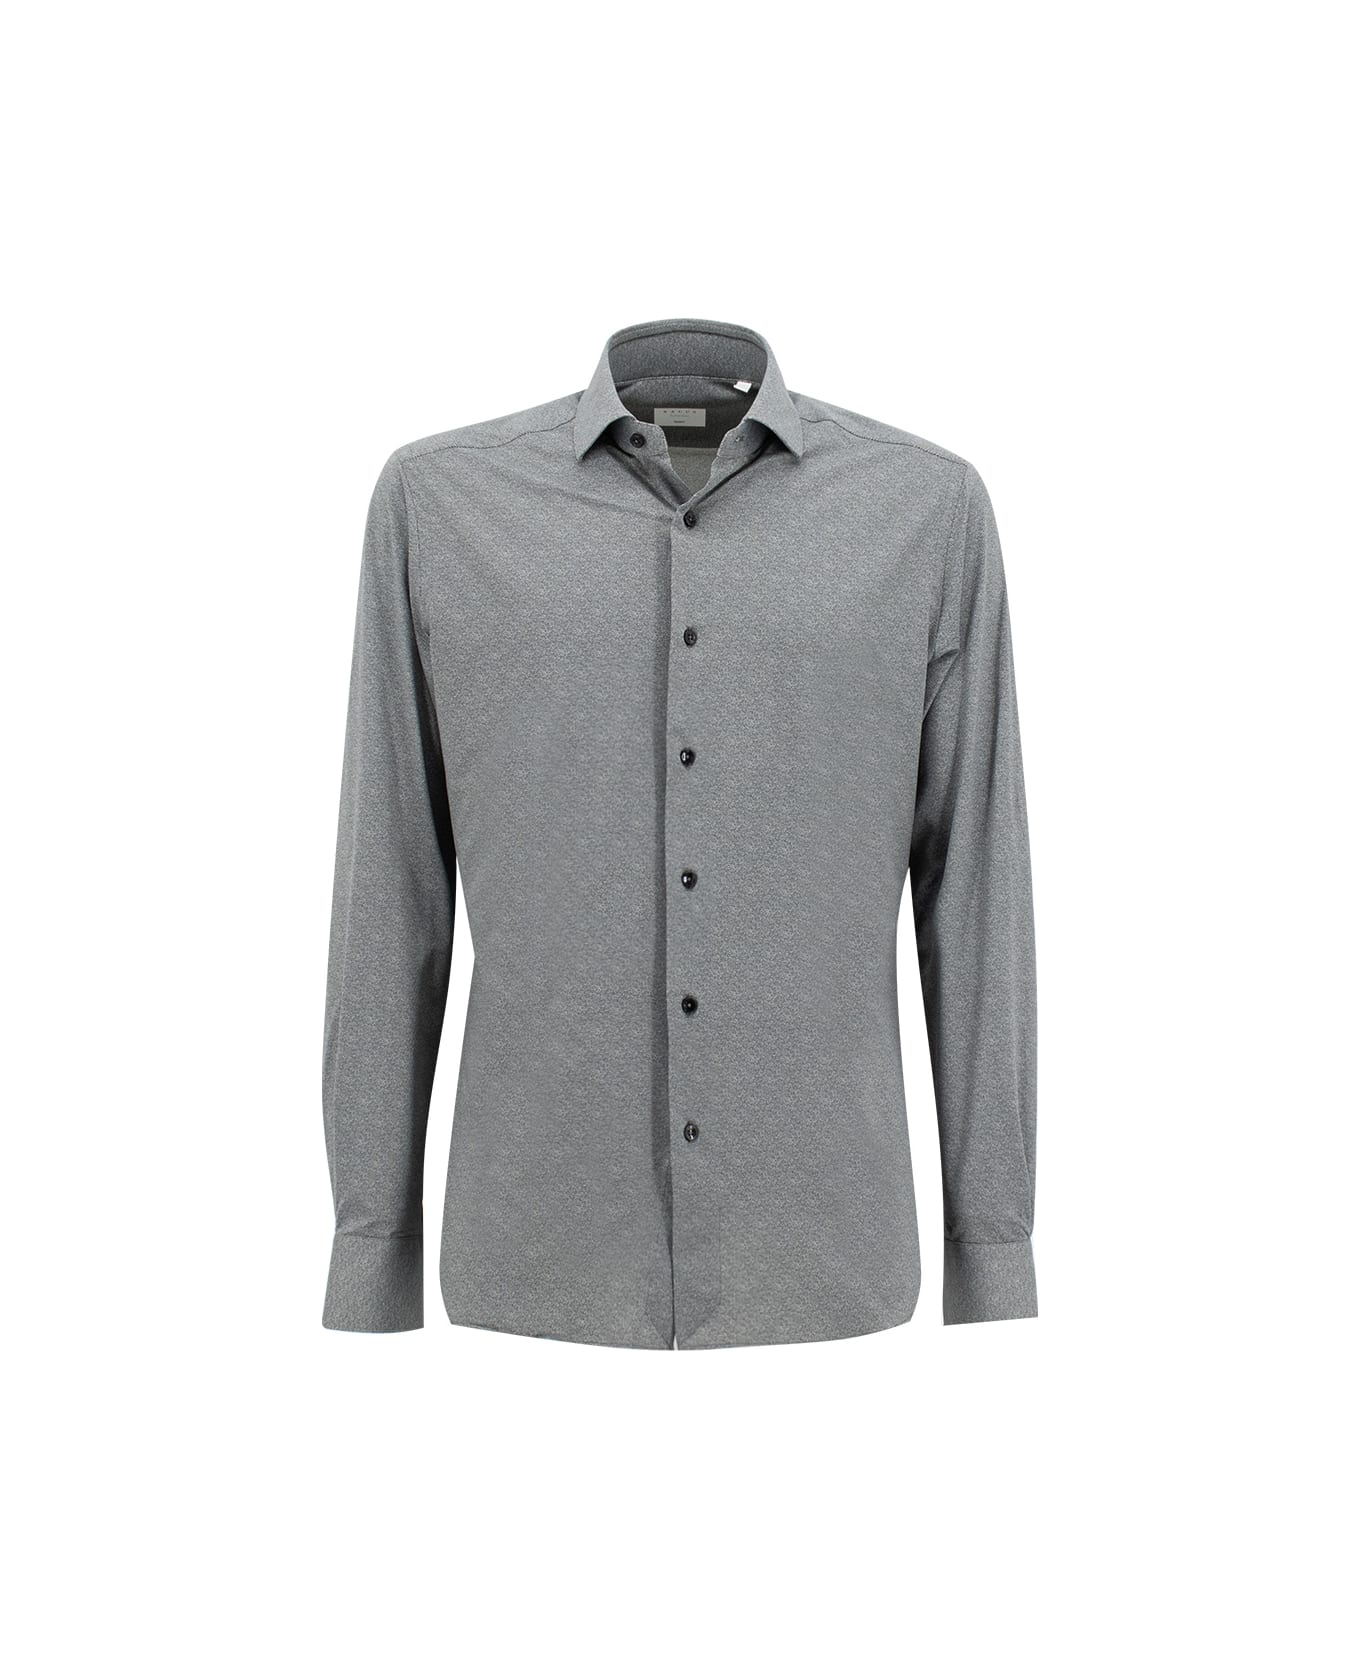 Xacus Shirt - DARK MELANGE シャツ